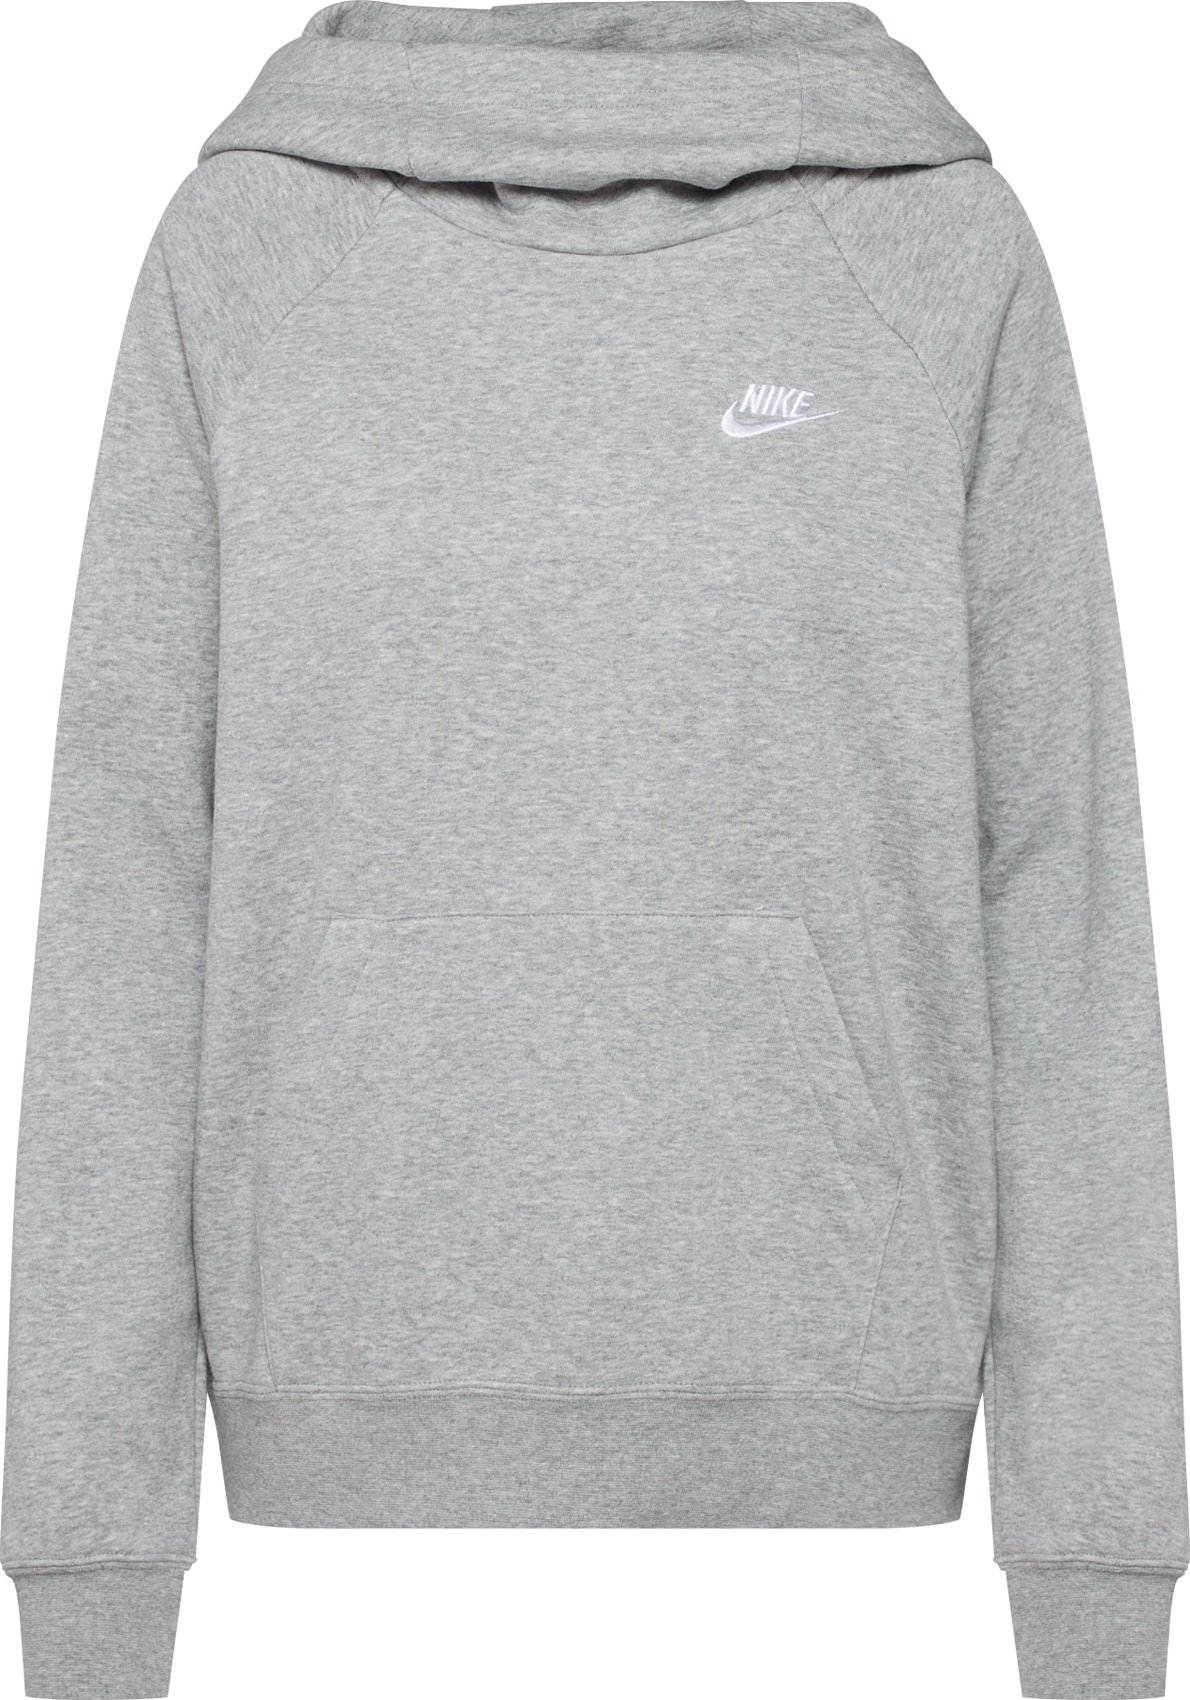 Nike Sportswear Mikina šedý melír